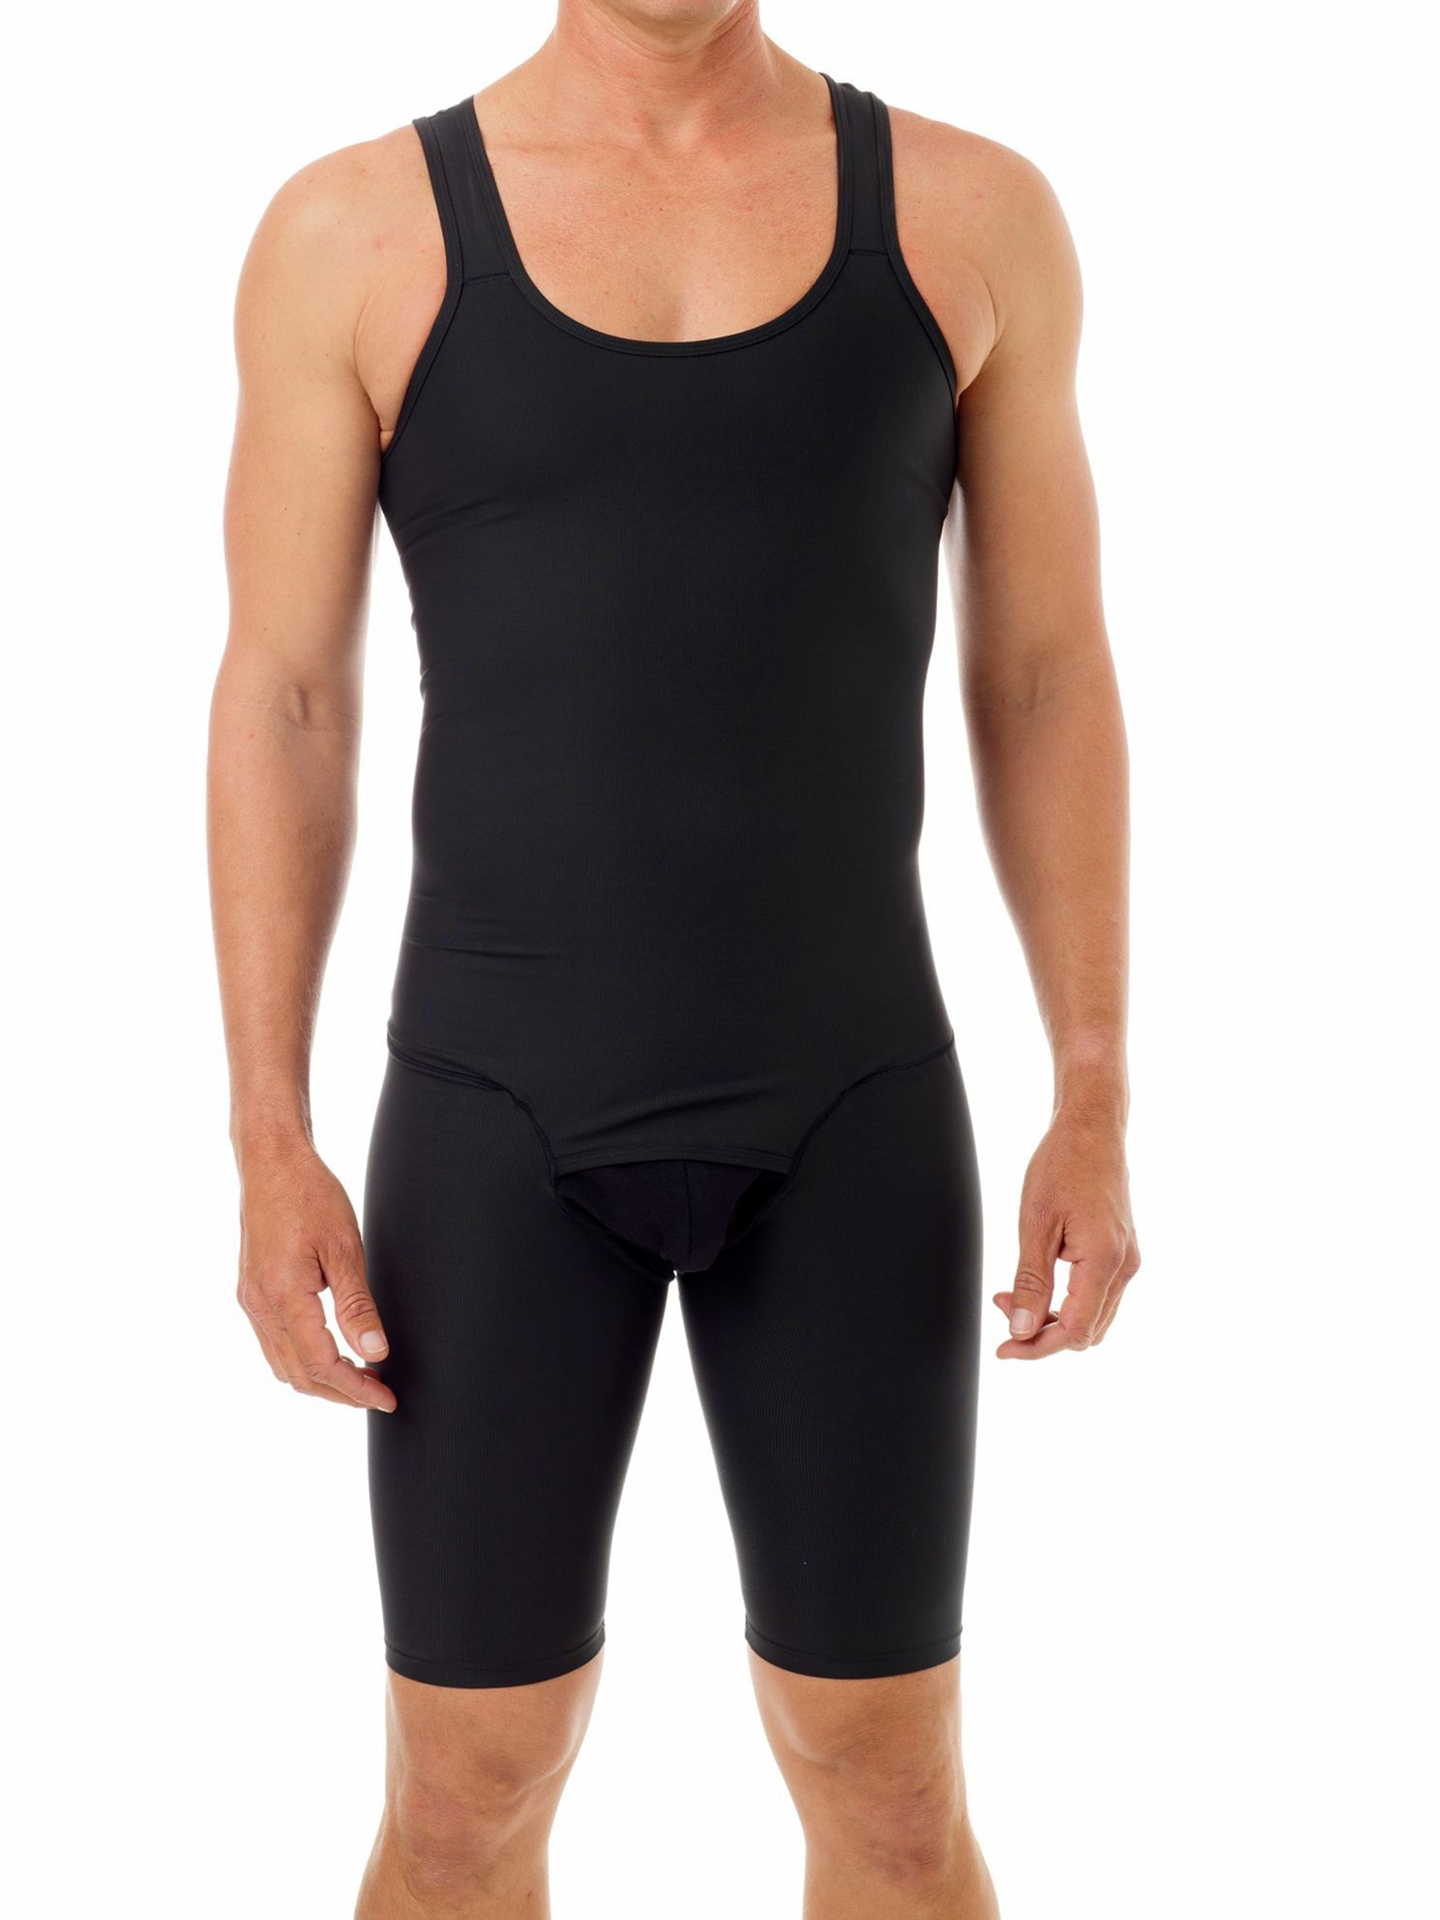 Men's Shapewear Bodysuit Full Body Shaper Compression Slimming Suit  Breathable Butt Lifter Hide Man Boobs slimming underwear